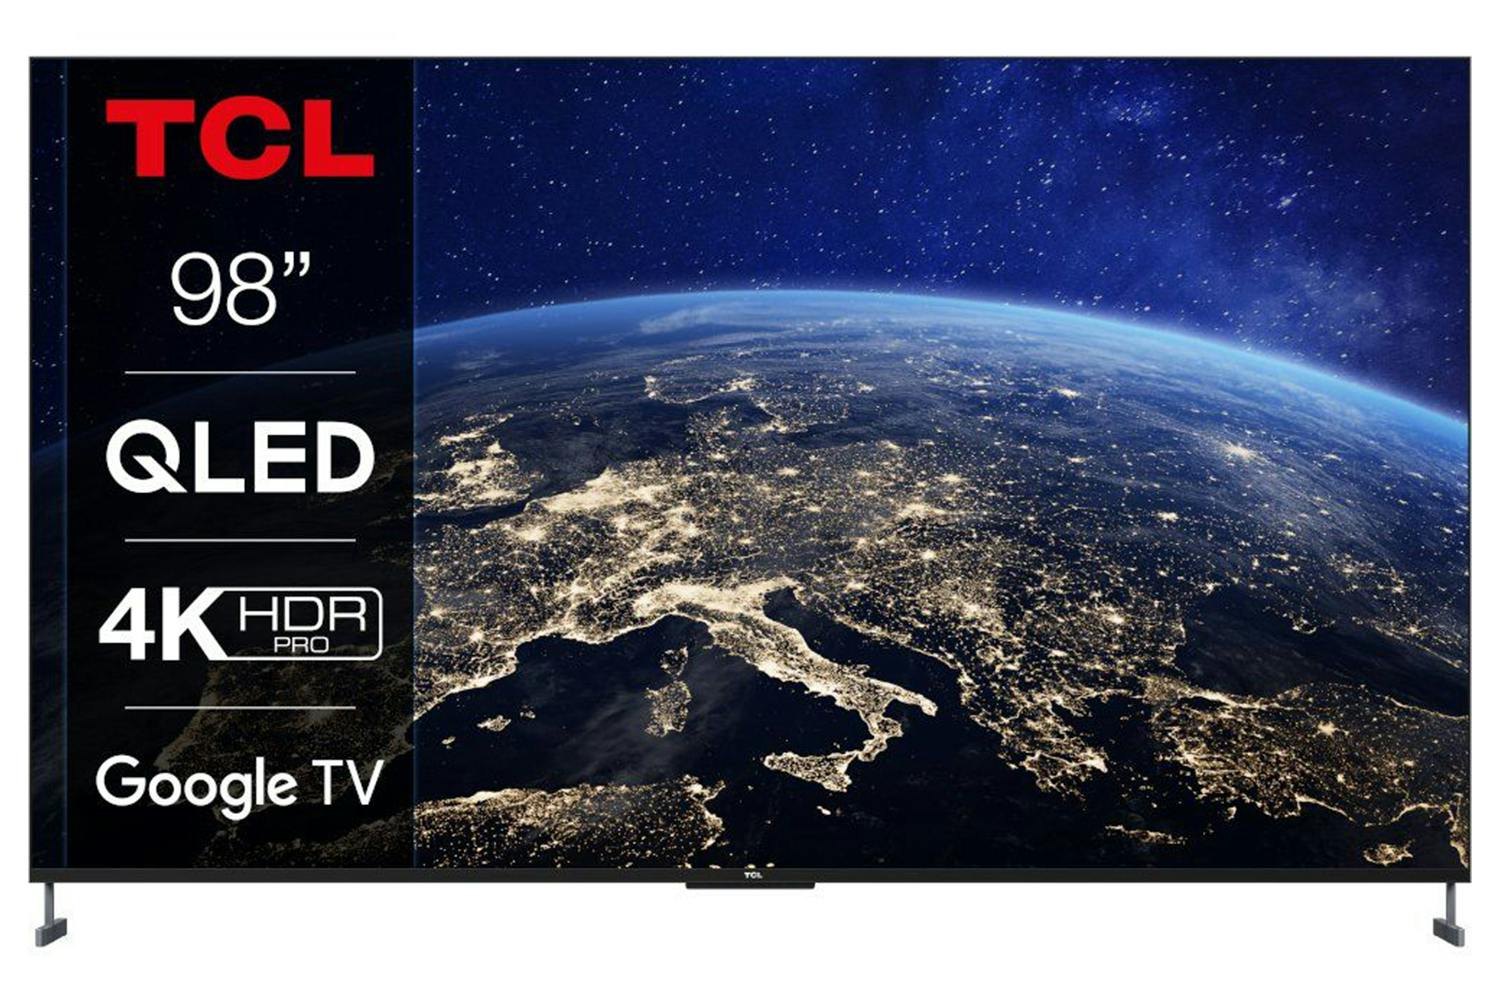 TCL C735K 98" 4K Ultra HD HDR QLED Google TV | 98C735K